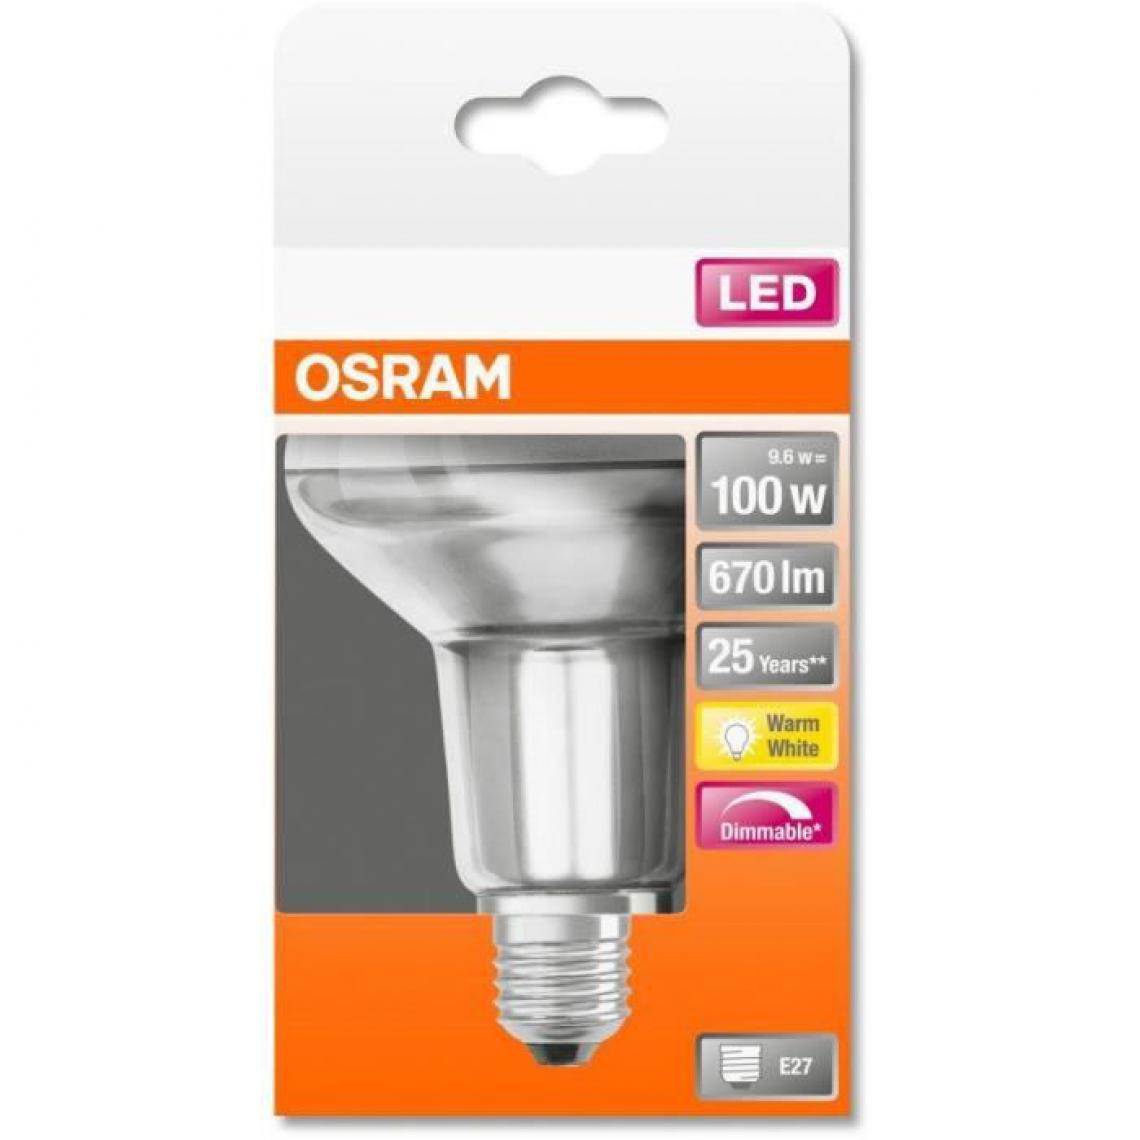 Osram - Spot R80 LED verre clair variable - 9,6W - Ampoules LED